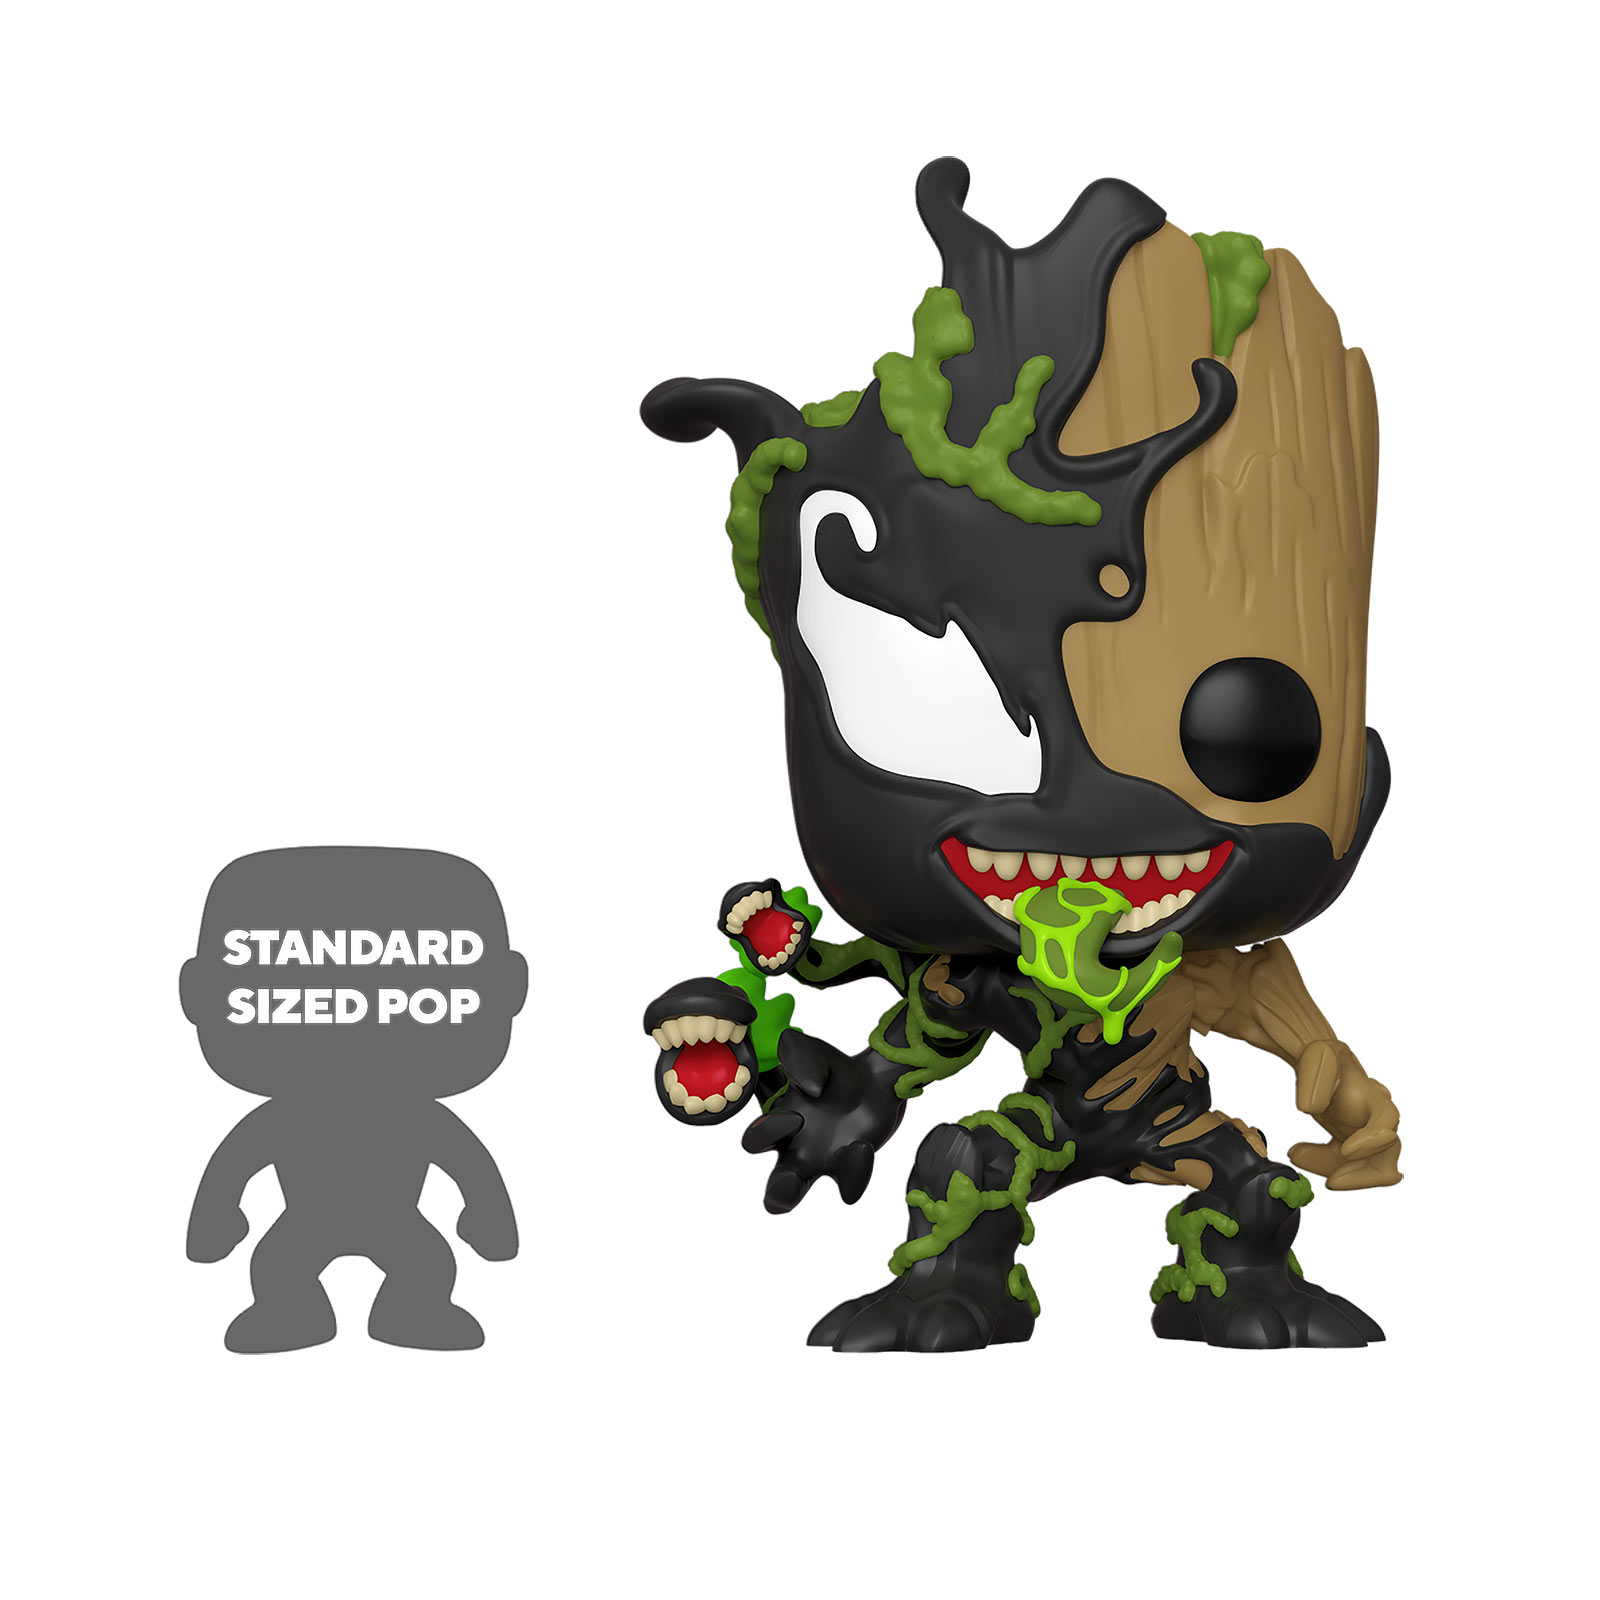 Marvel - Venomized Groot Funko Pop Wackelkopf-Figur 25 cm